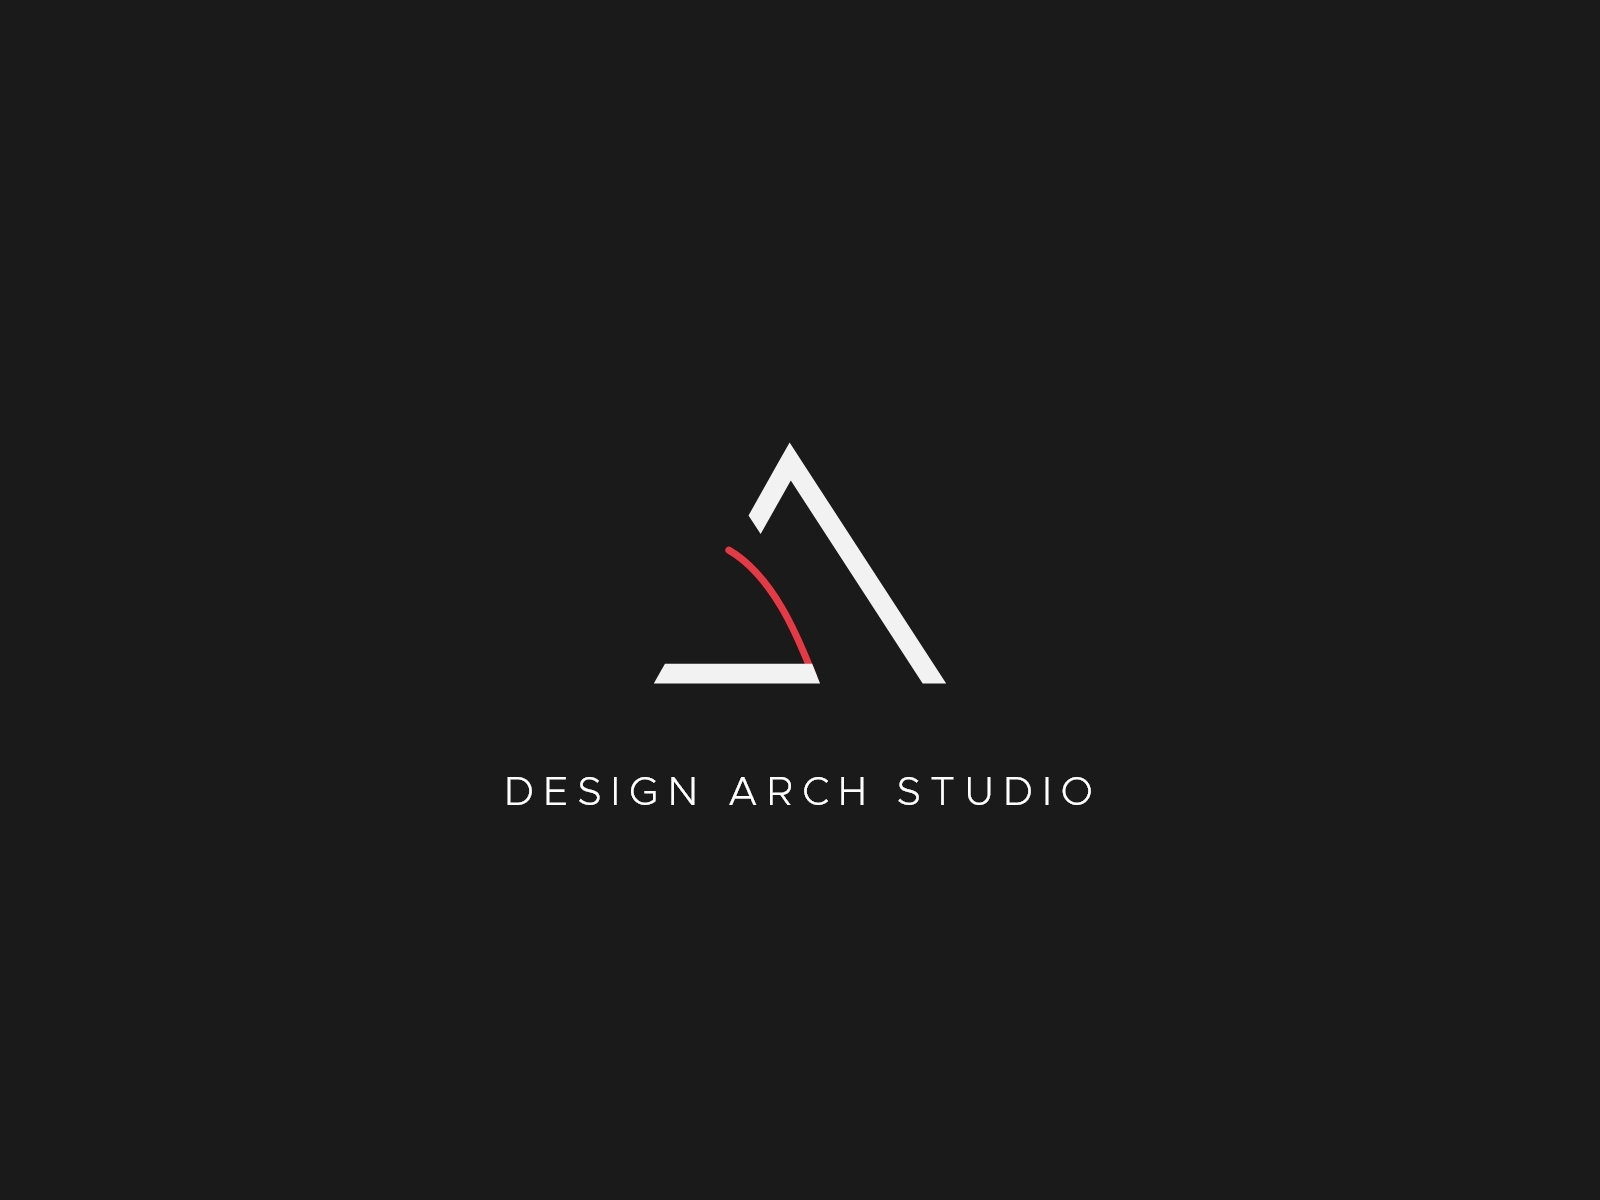 Design Arch Studio by Shivam Mishra on Dribbble